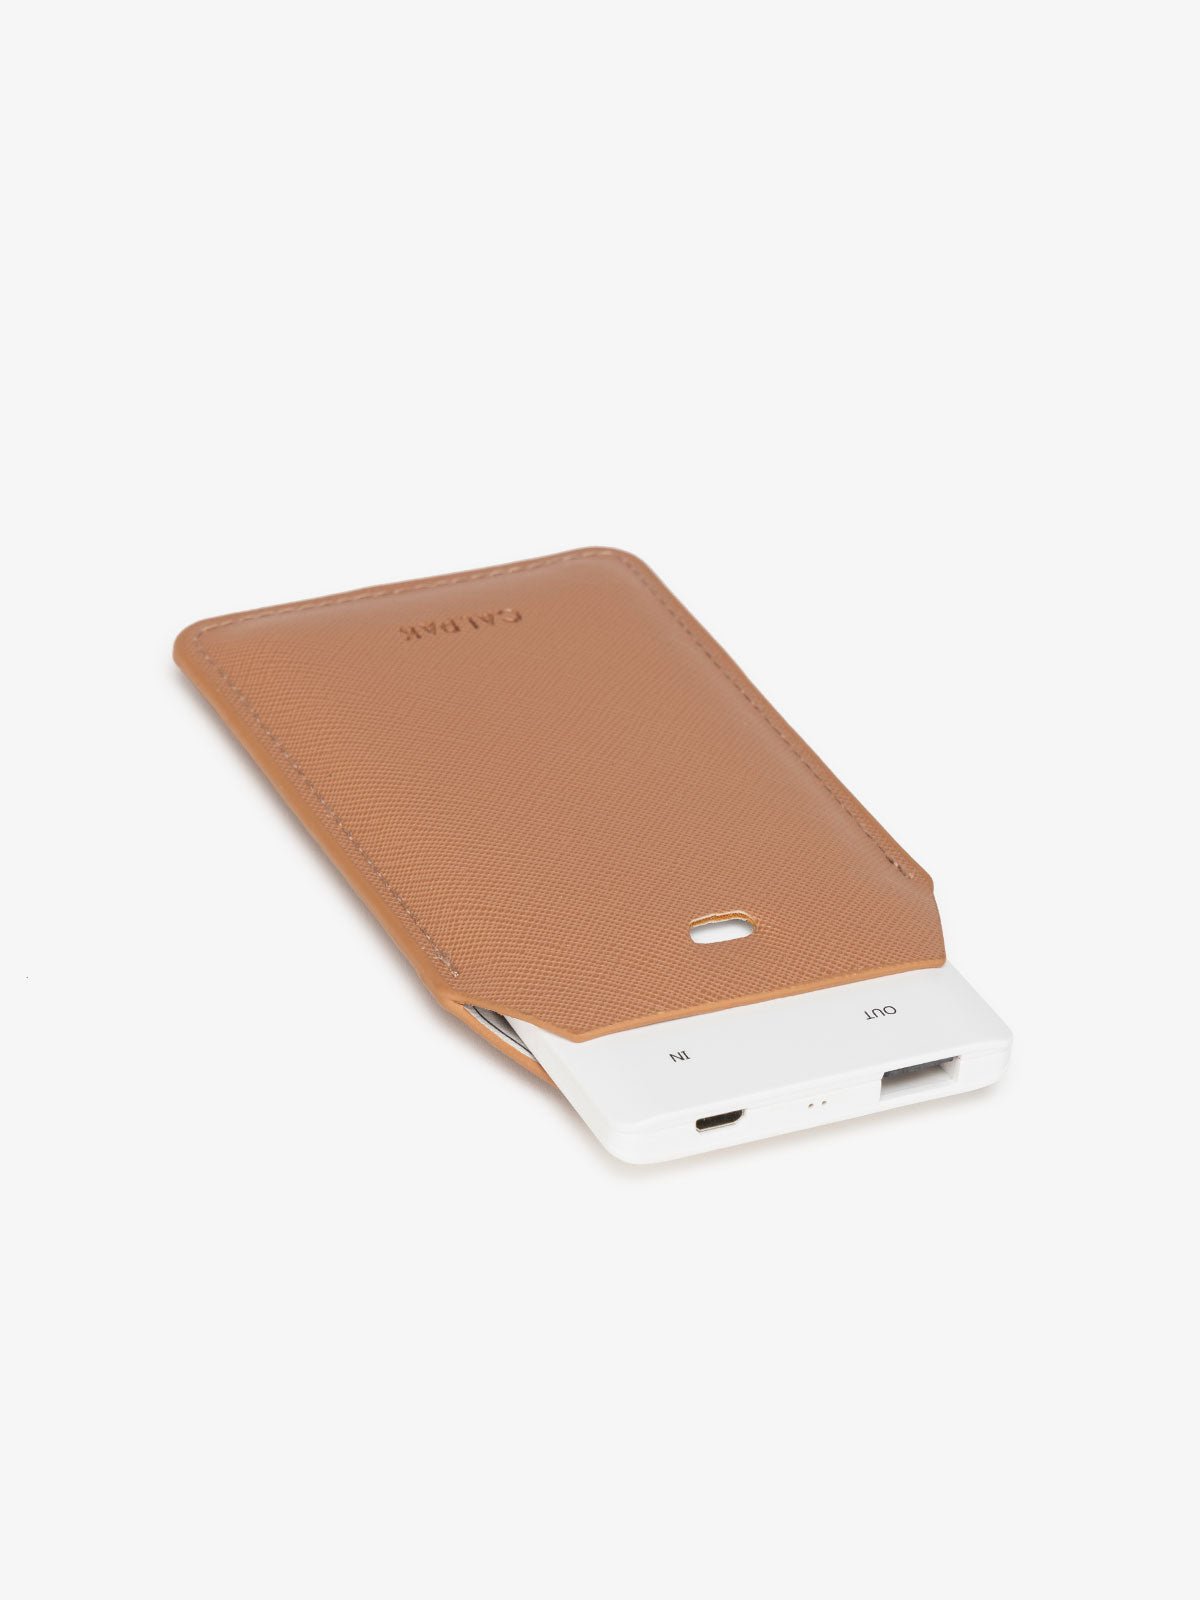 CALPAK portable charger in caramel color